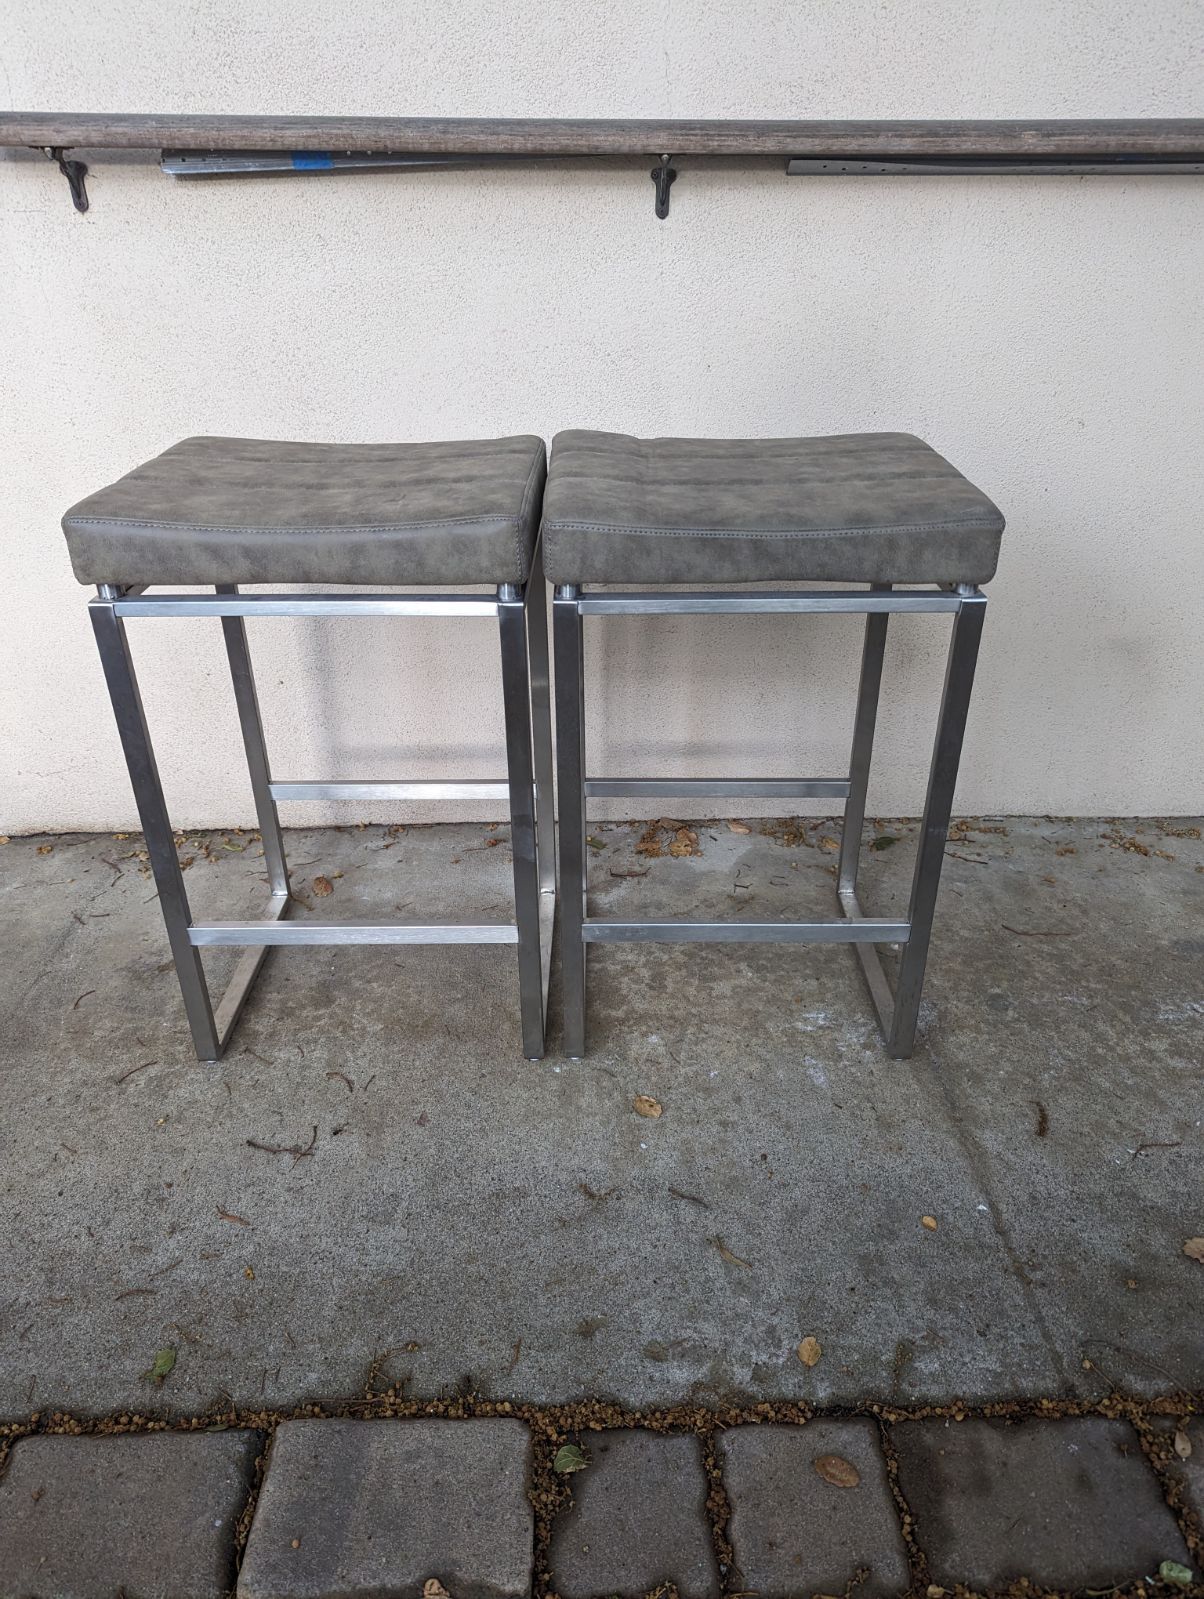 Set of 2 Counter Barstools